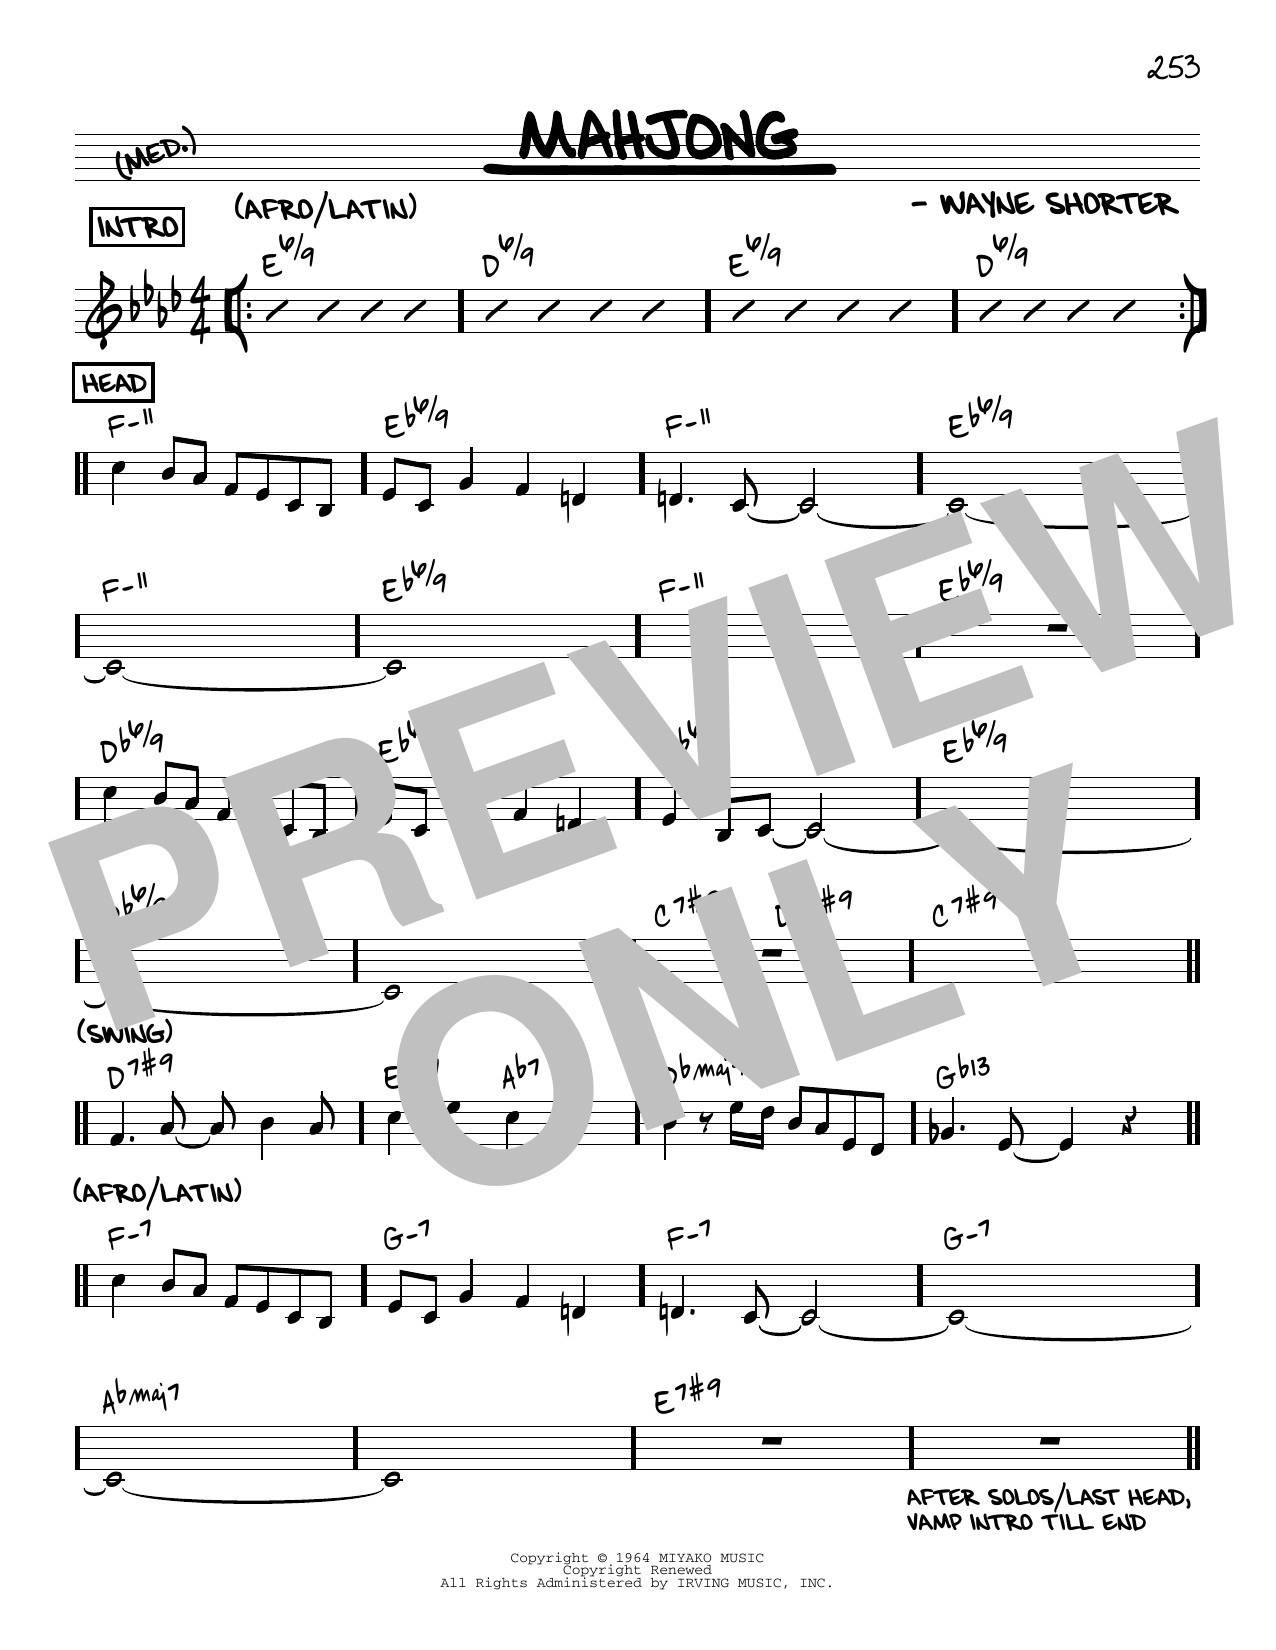 Wayne Shorter Mahjong [Reharmonized version] (arr. Jack Grassel) Sheet Music Notes & Chords for Real Book – Melody & Chords - Download or Print PDF